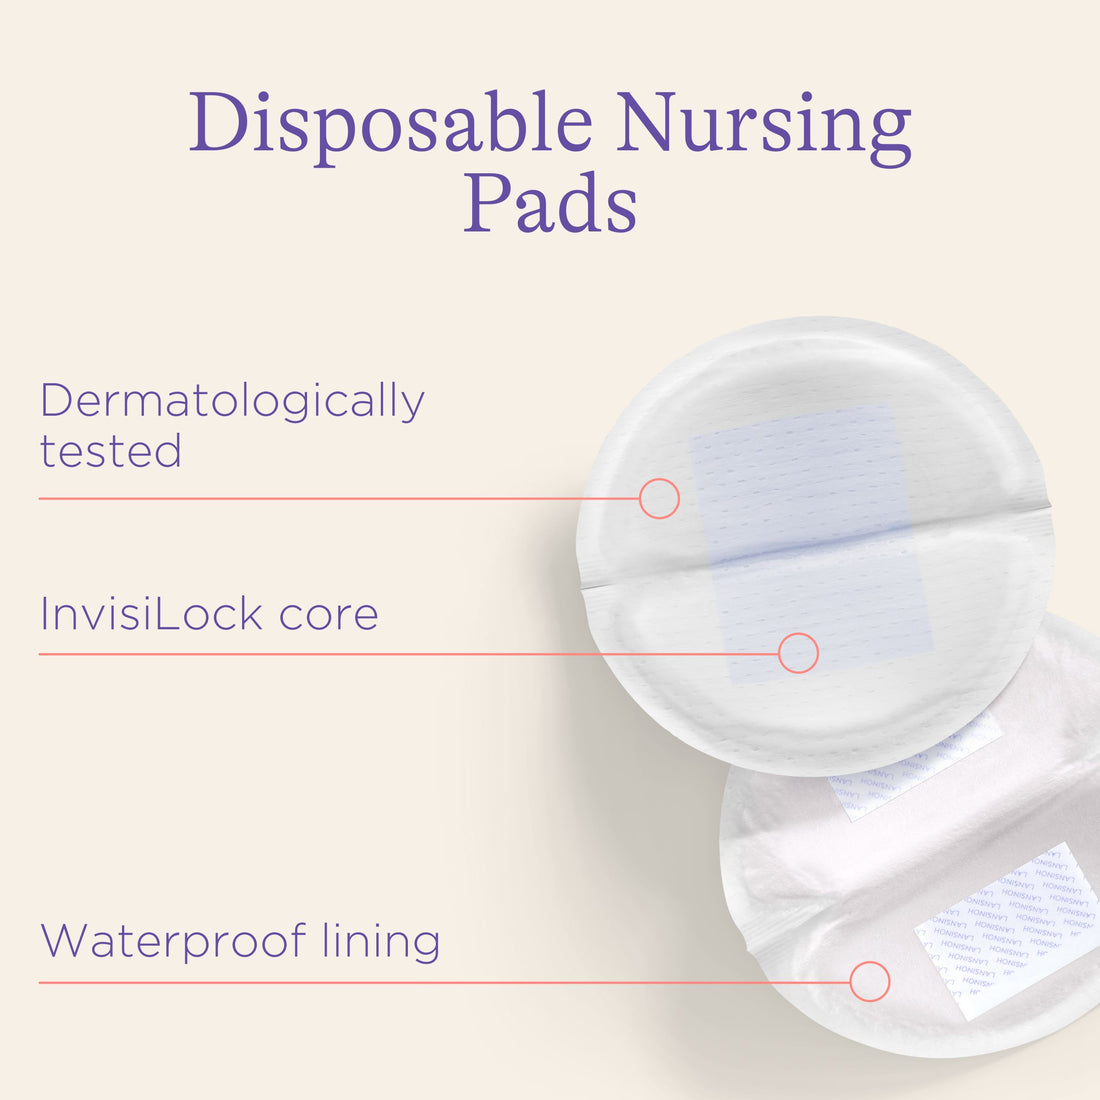 Lansinoh Nursing Pads – Healthy Scoop